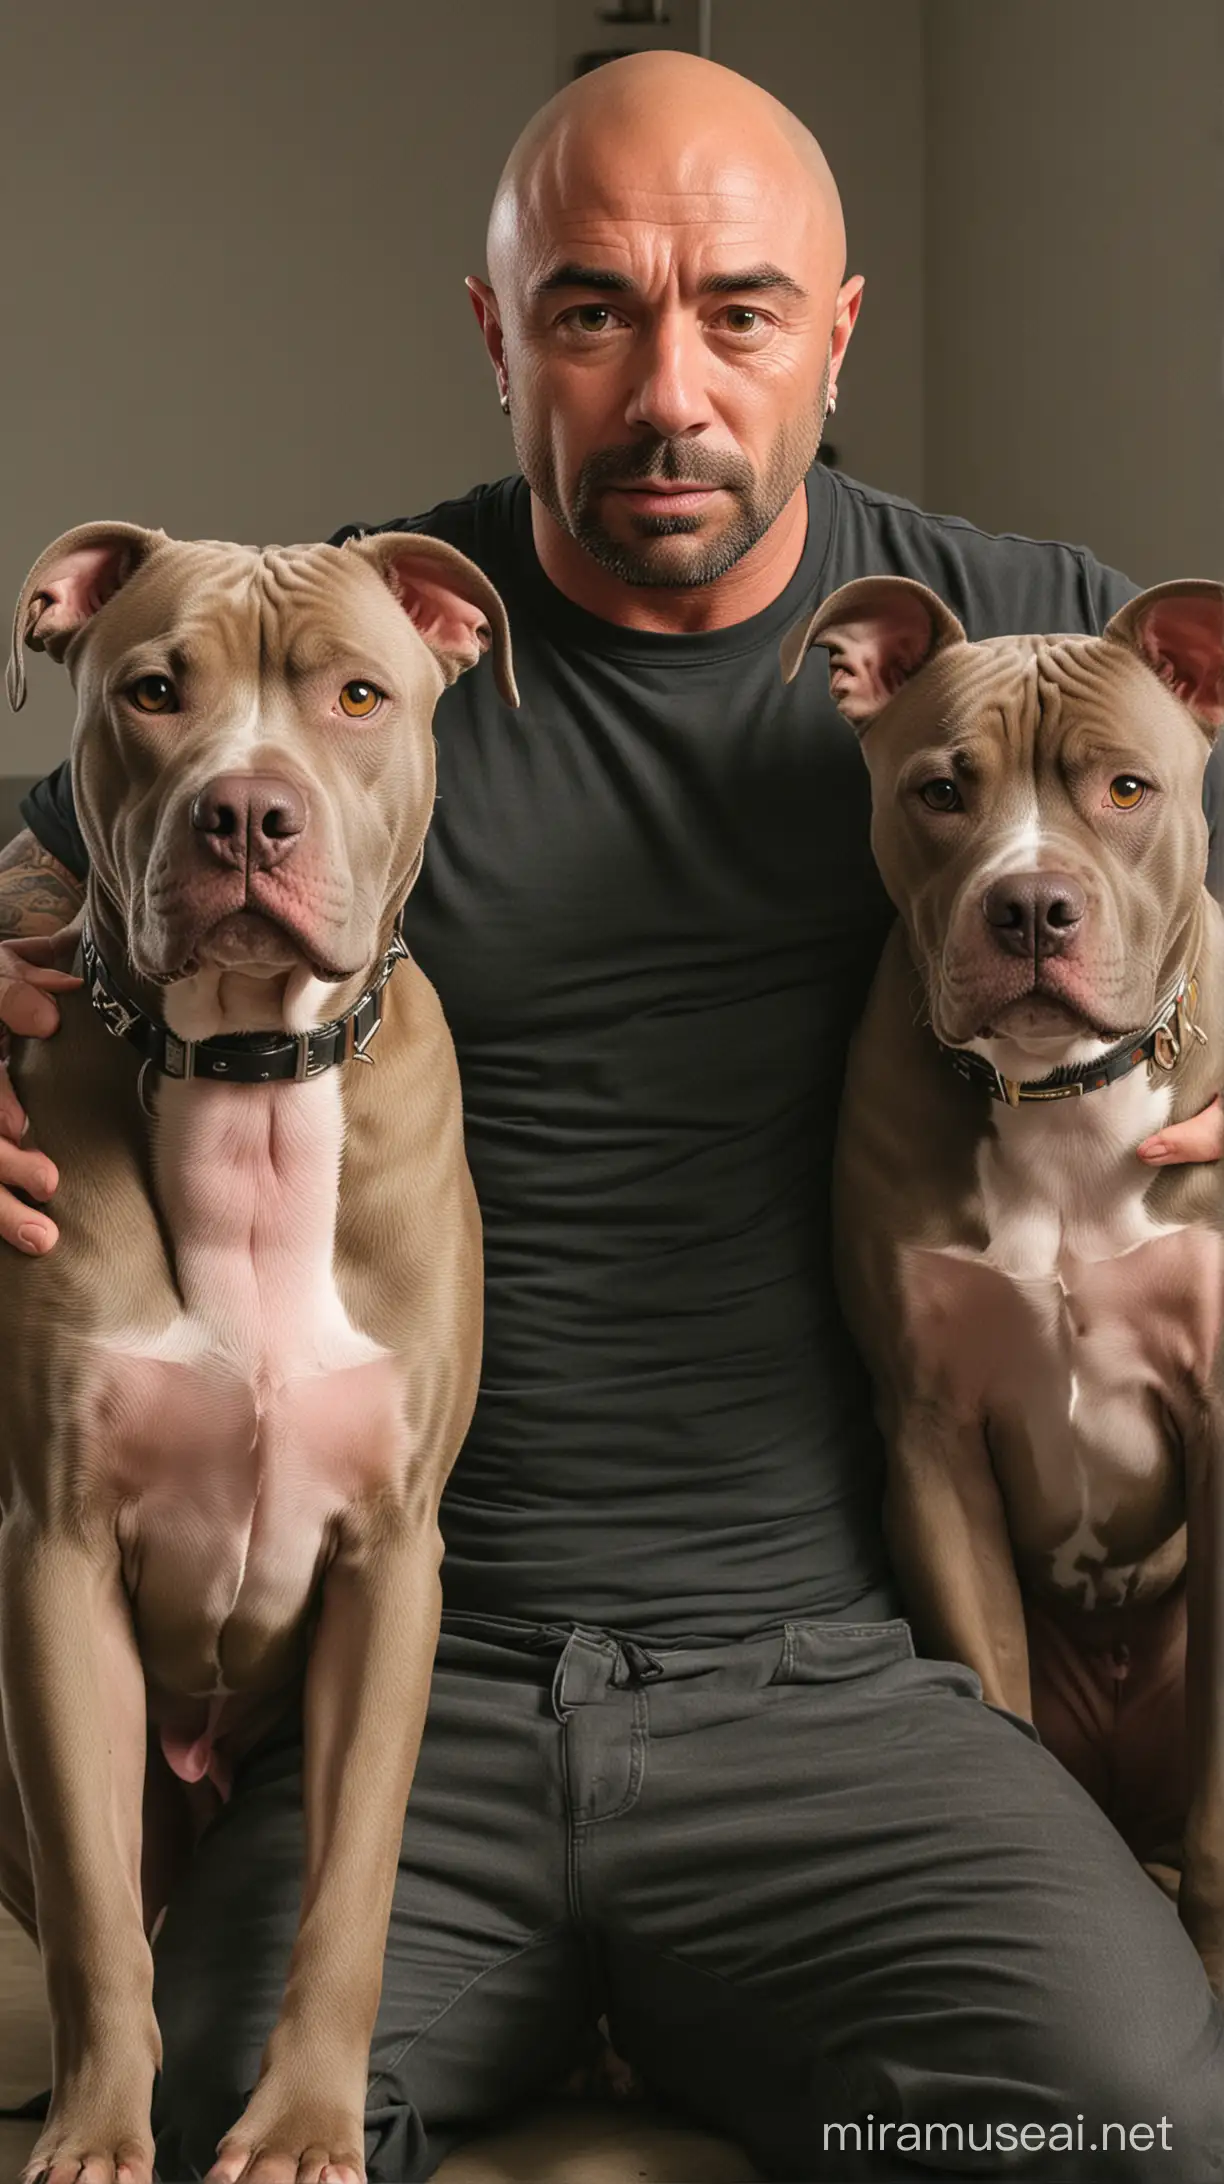 joe rogan with his 2 senior pitbull dogs, sad mood